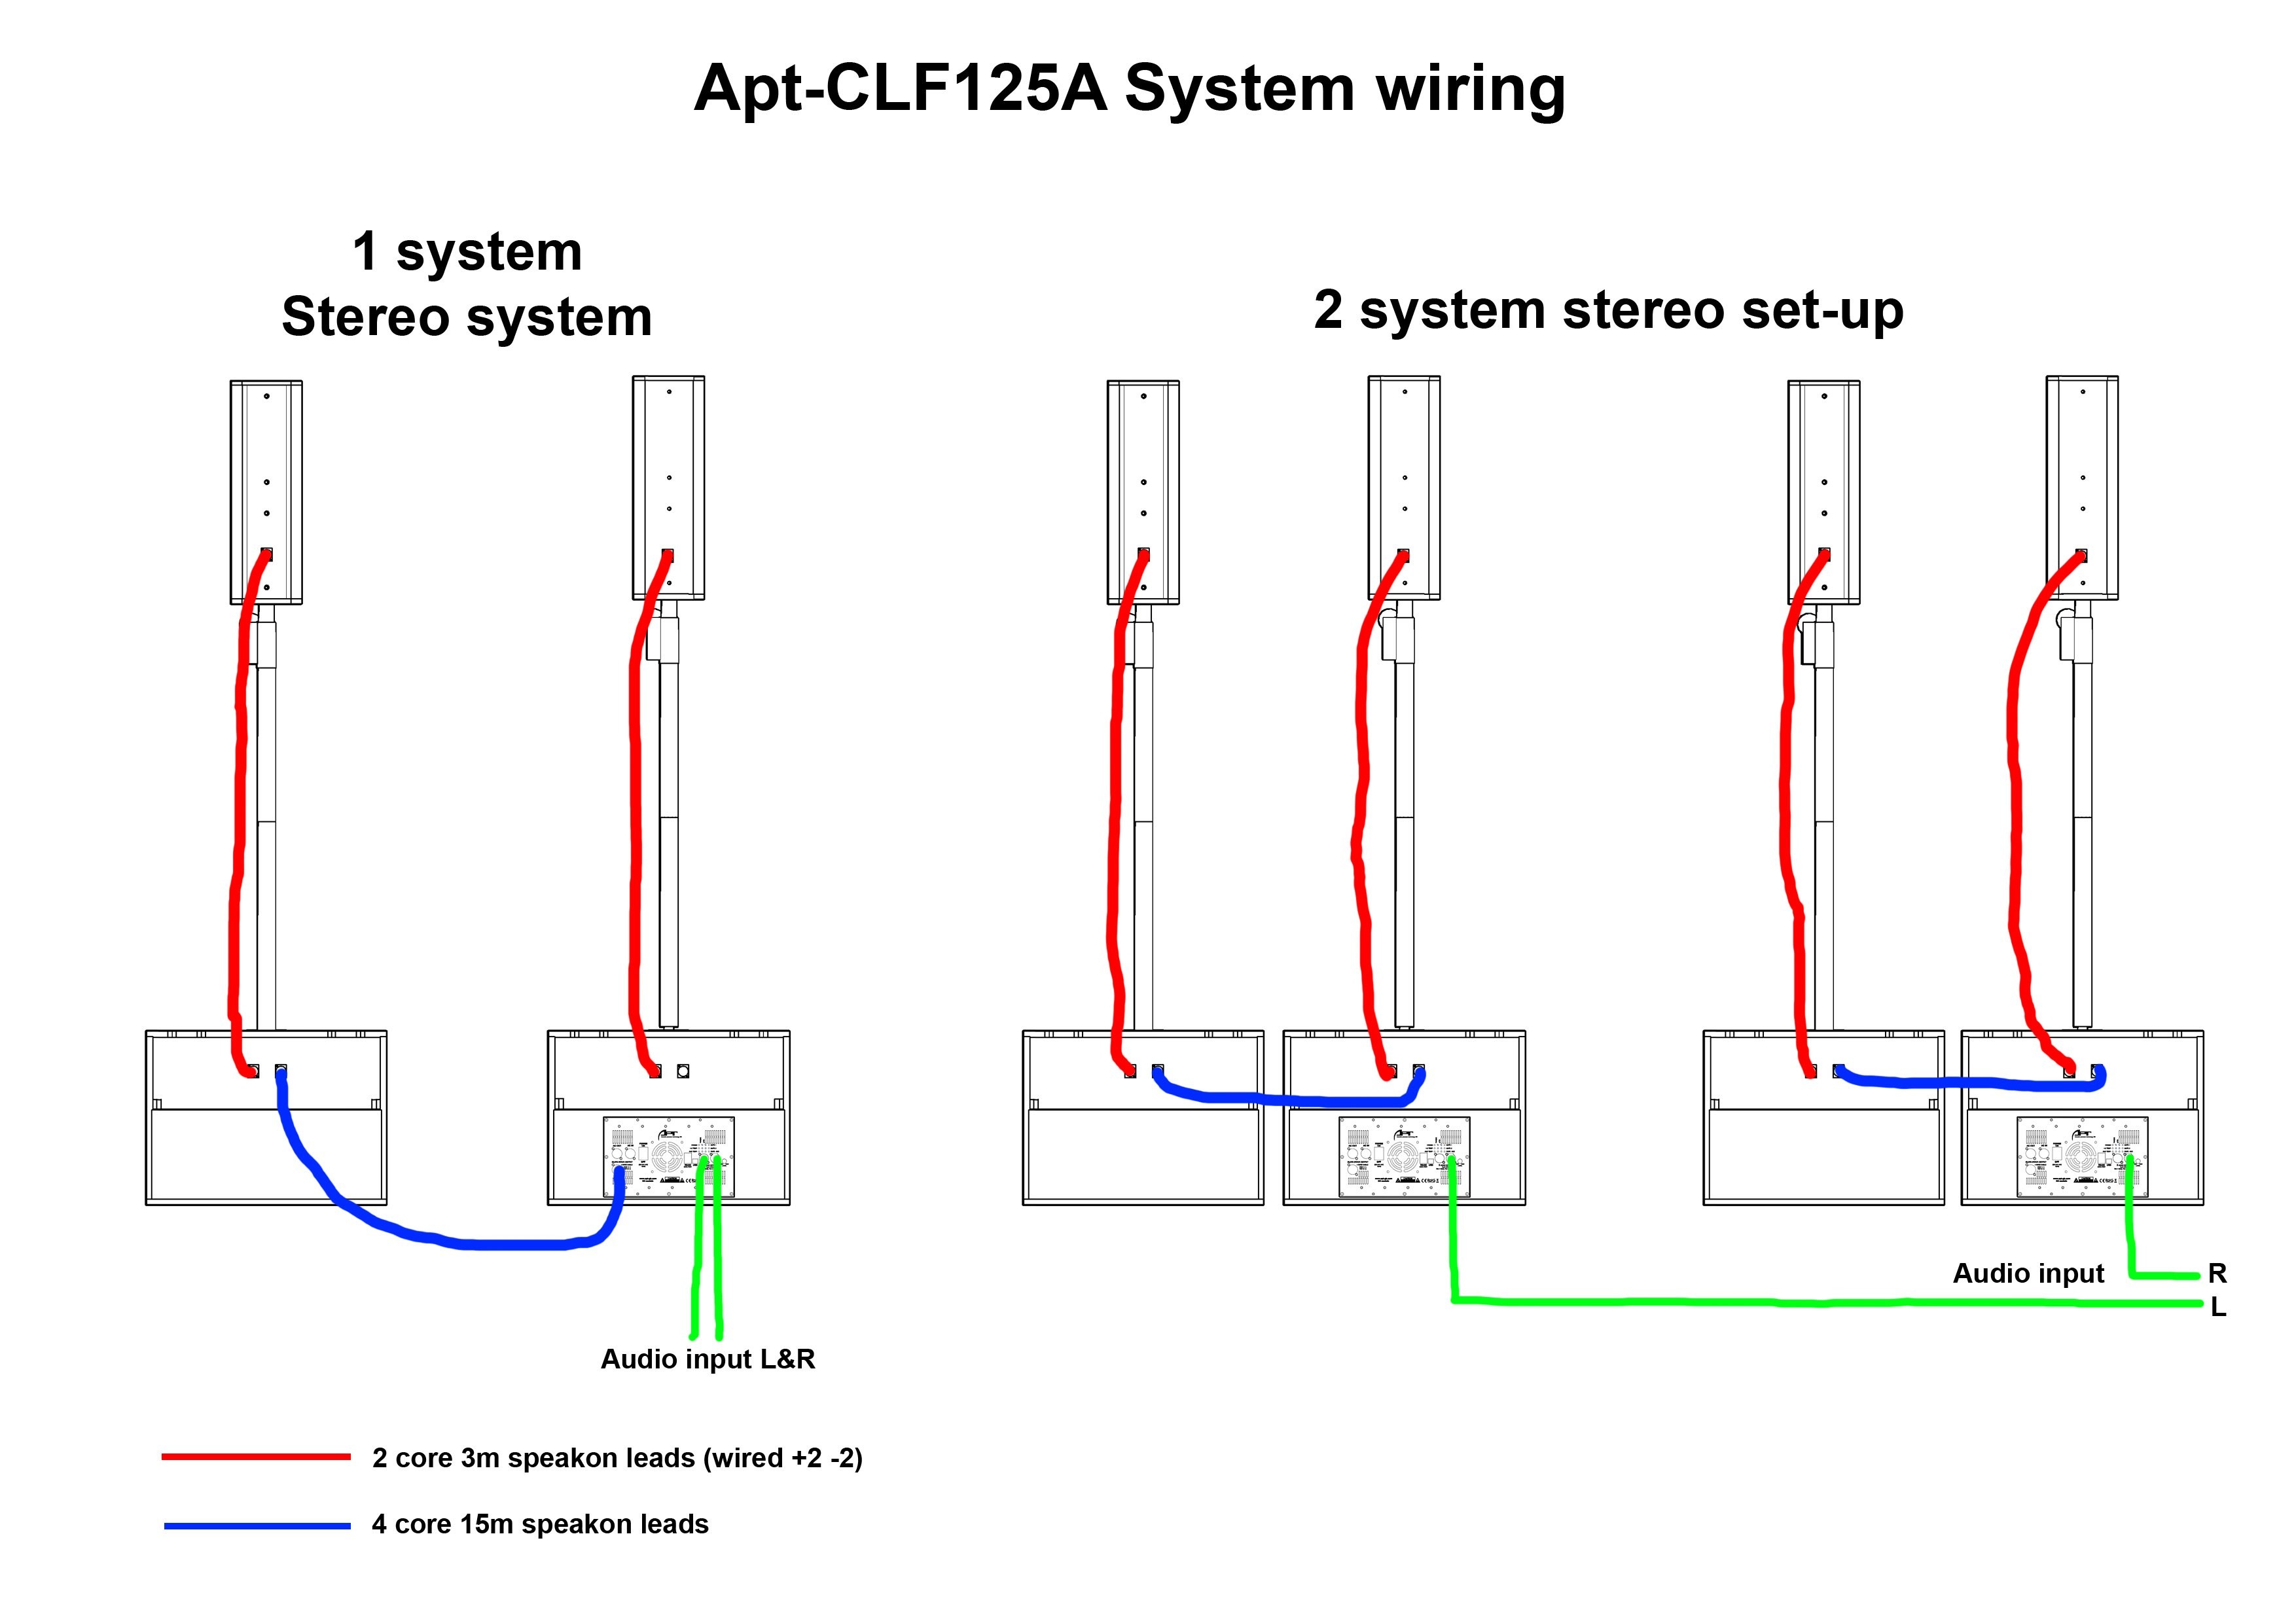 4 pole speakon wiring diagram webtor me throughout random 2 4 pole rh cinemaparadiso me Speakon